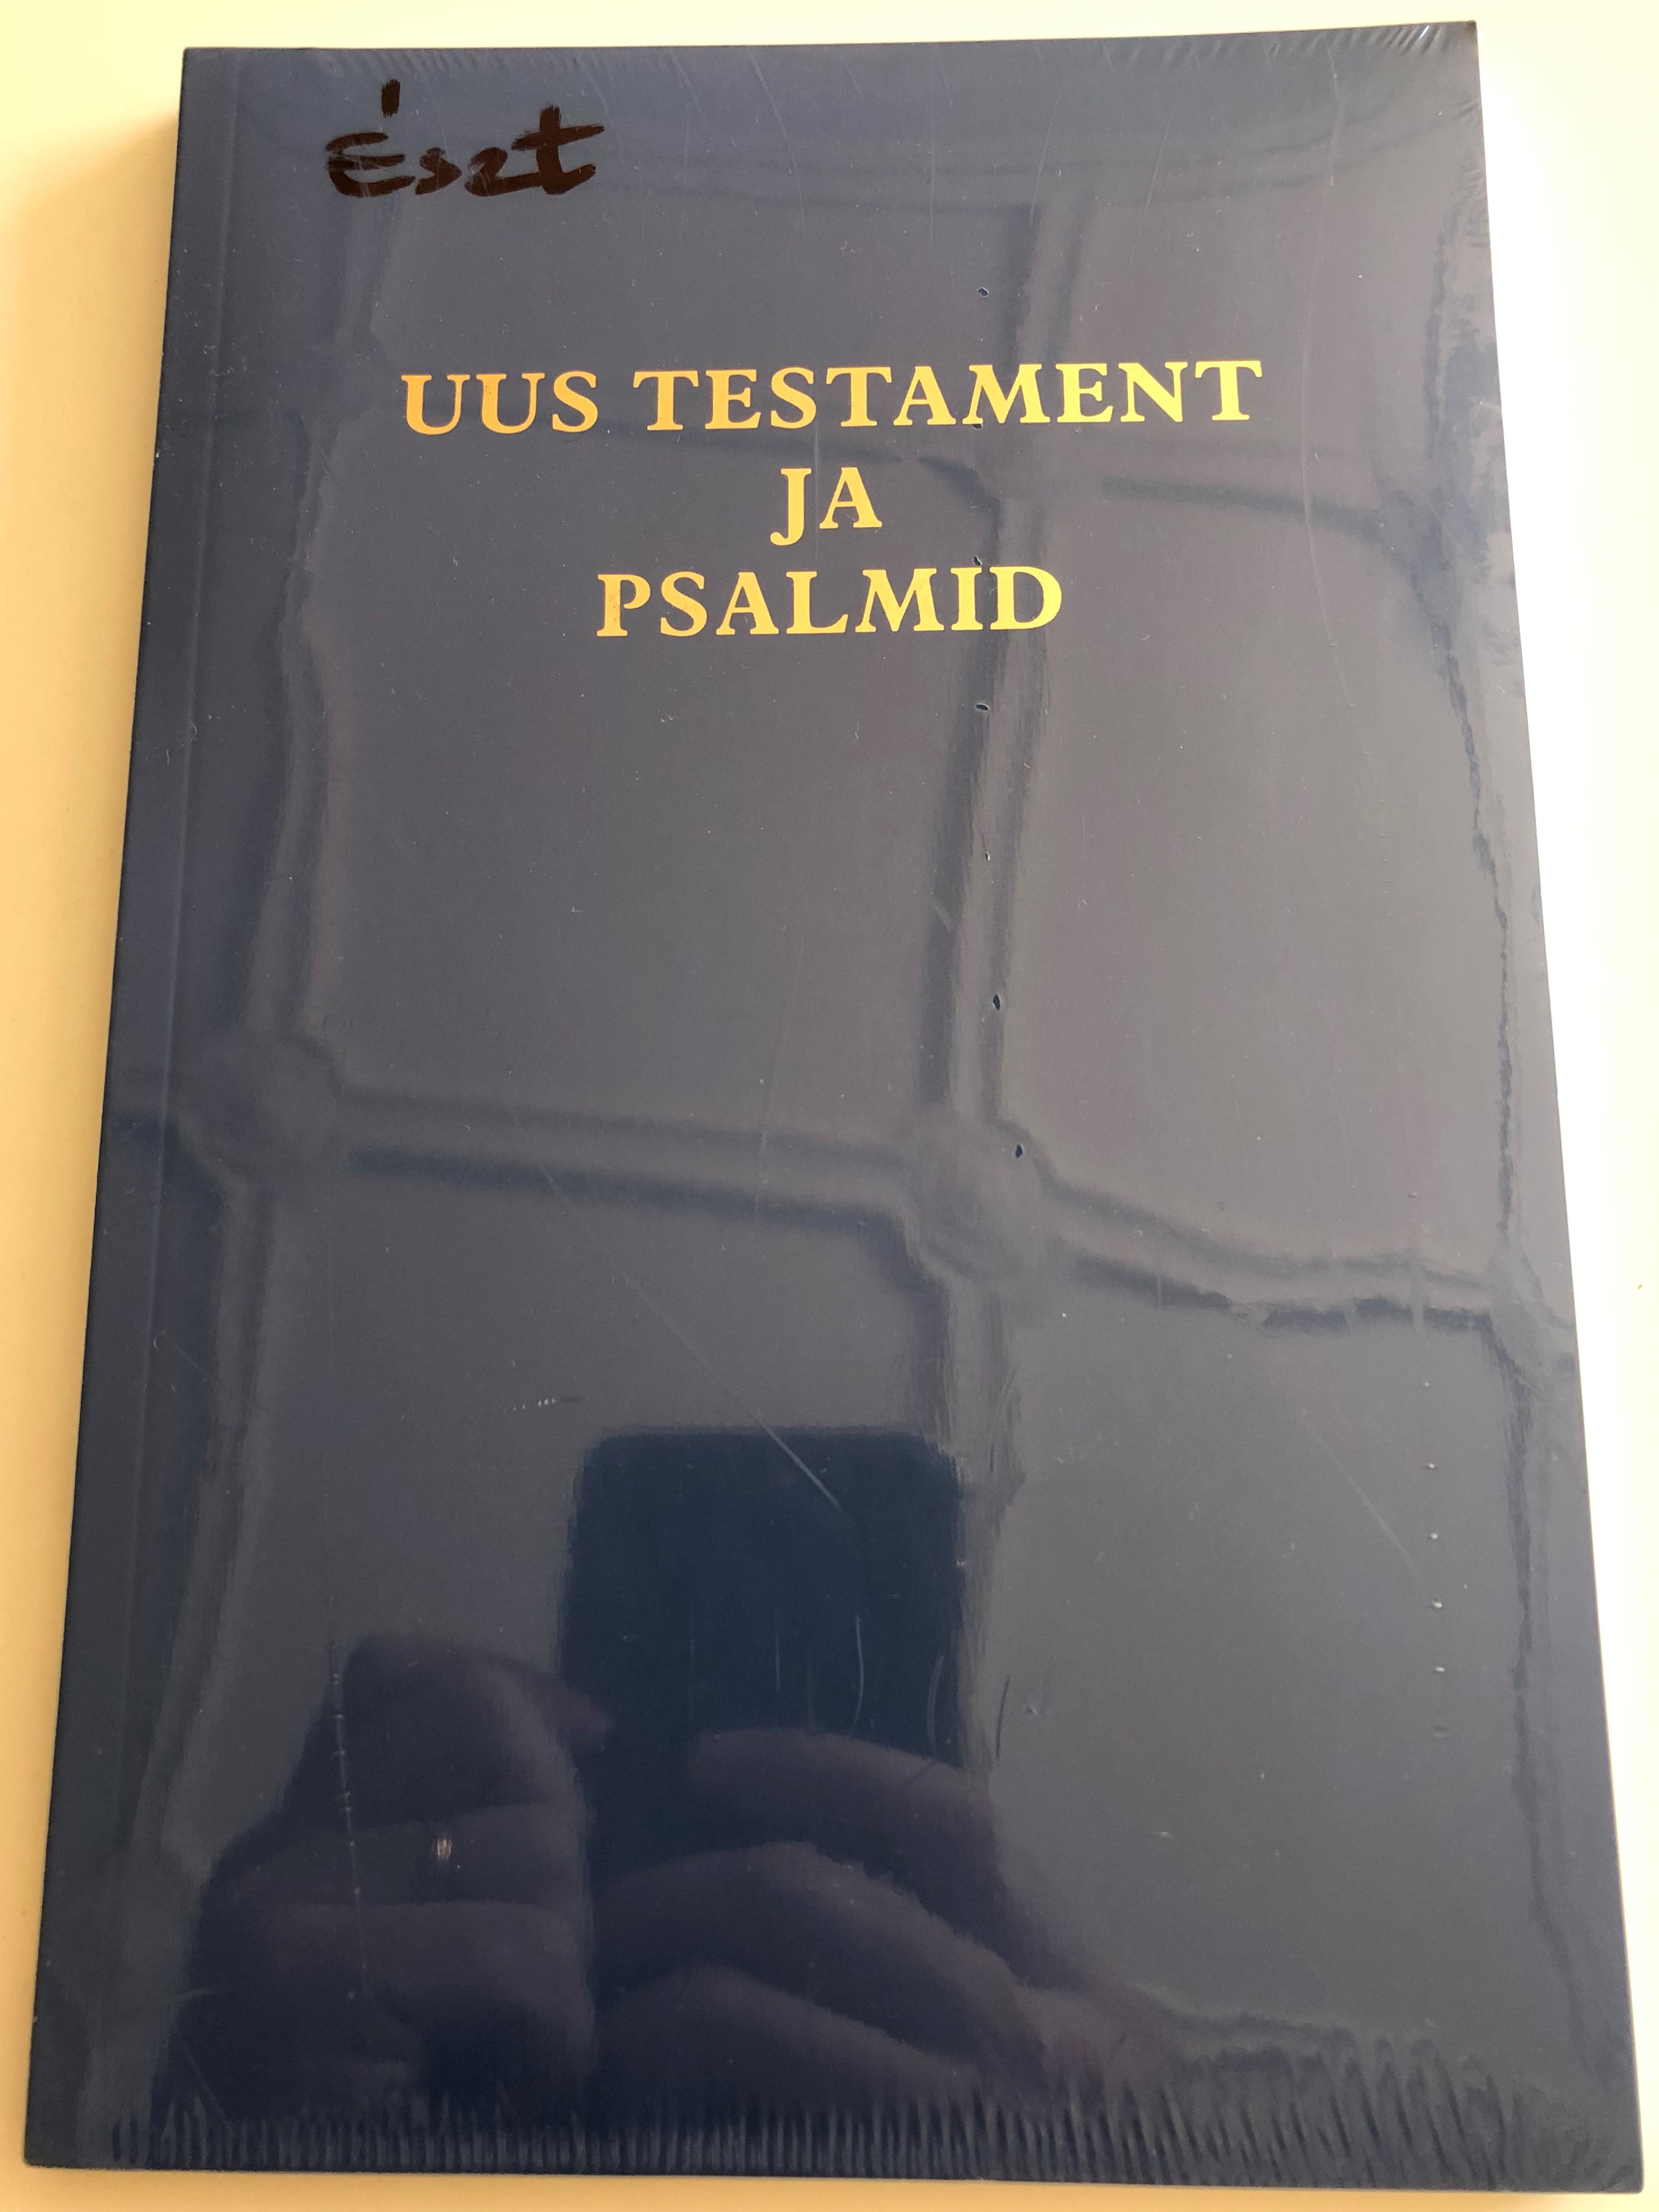 uus-testament-ja-psalmid-estonian-new-testament-and-psalms-1.jpg